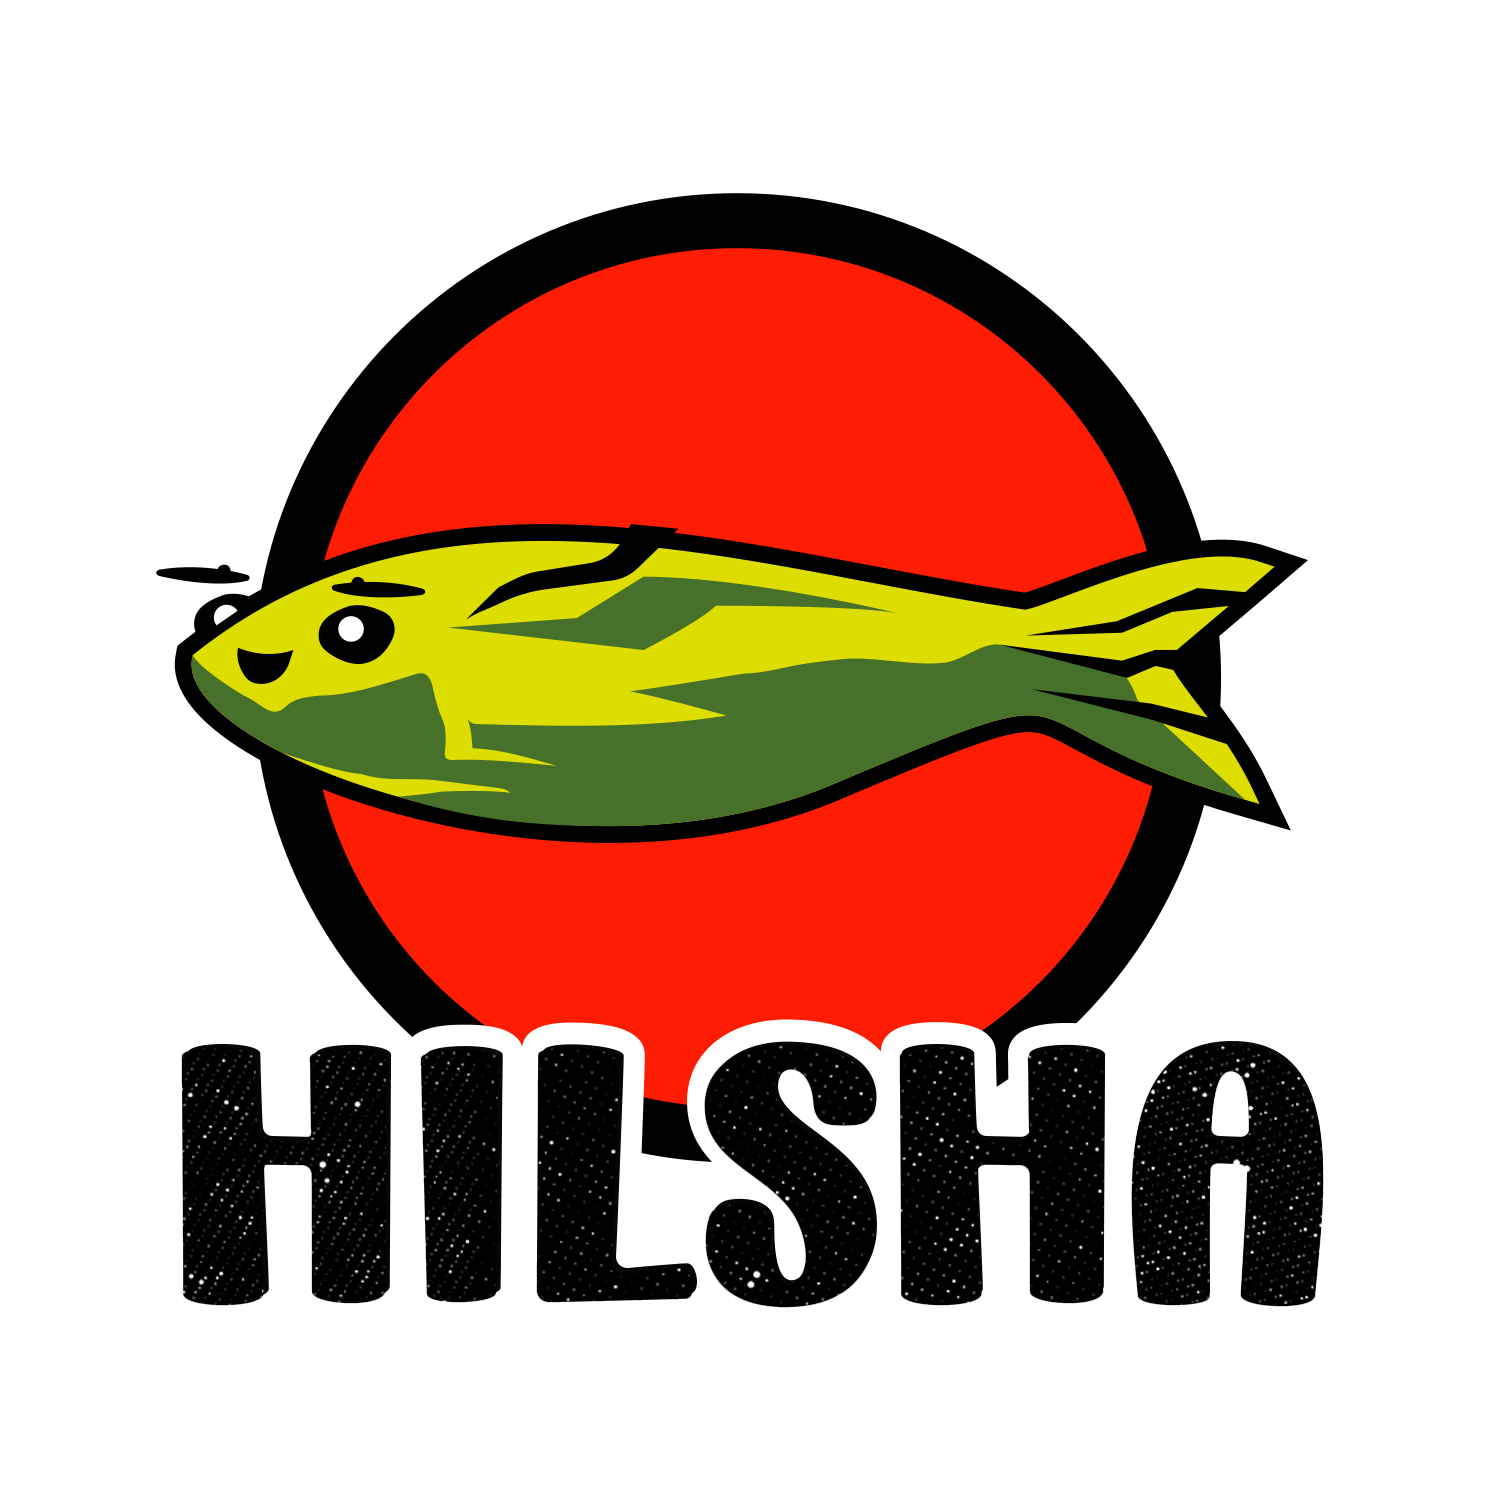 HILSHA